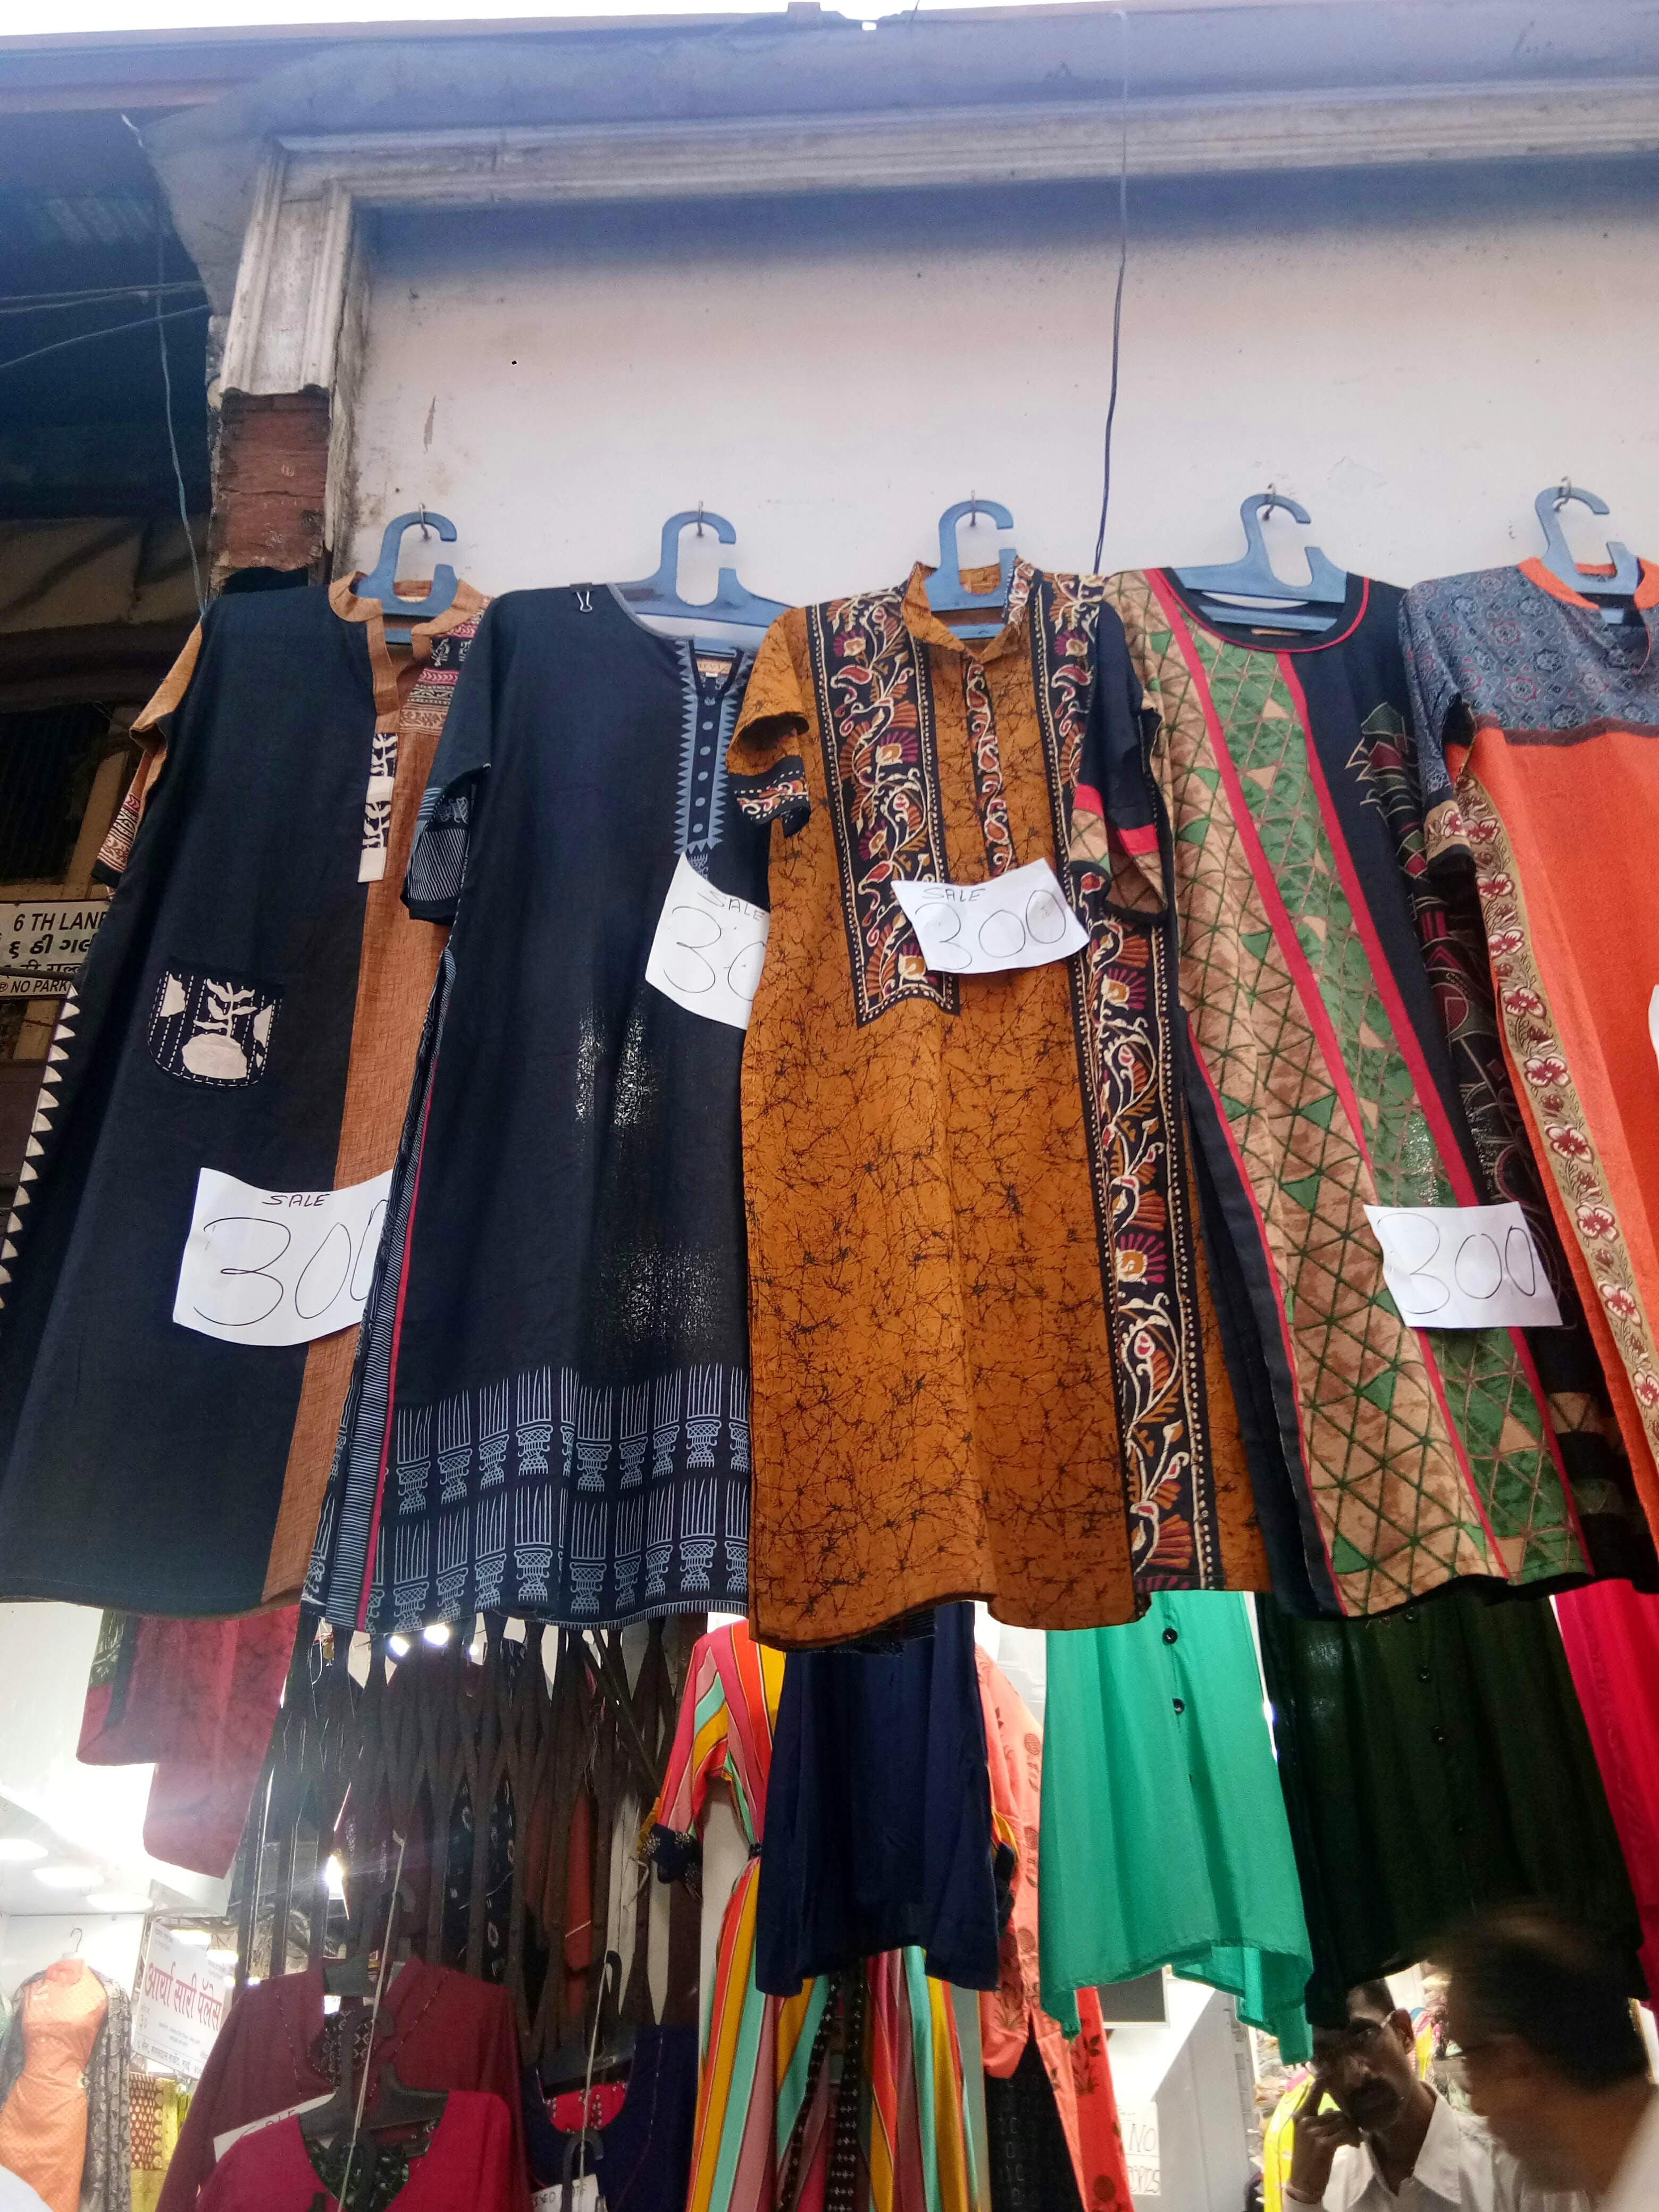 Clothing,Boutique,Textile,Room,Clothes hanger,Bazaar